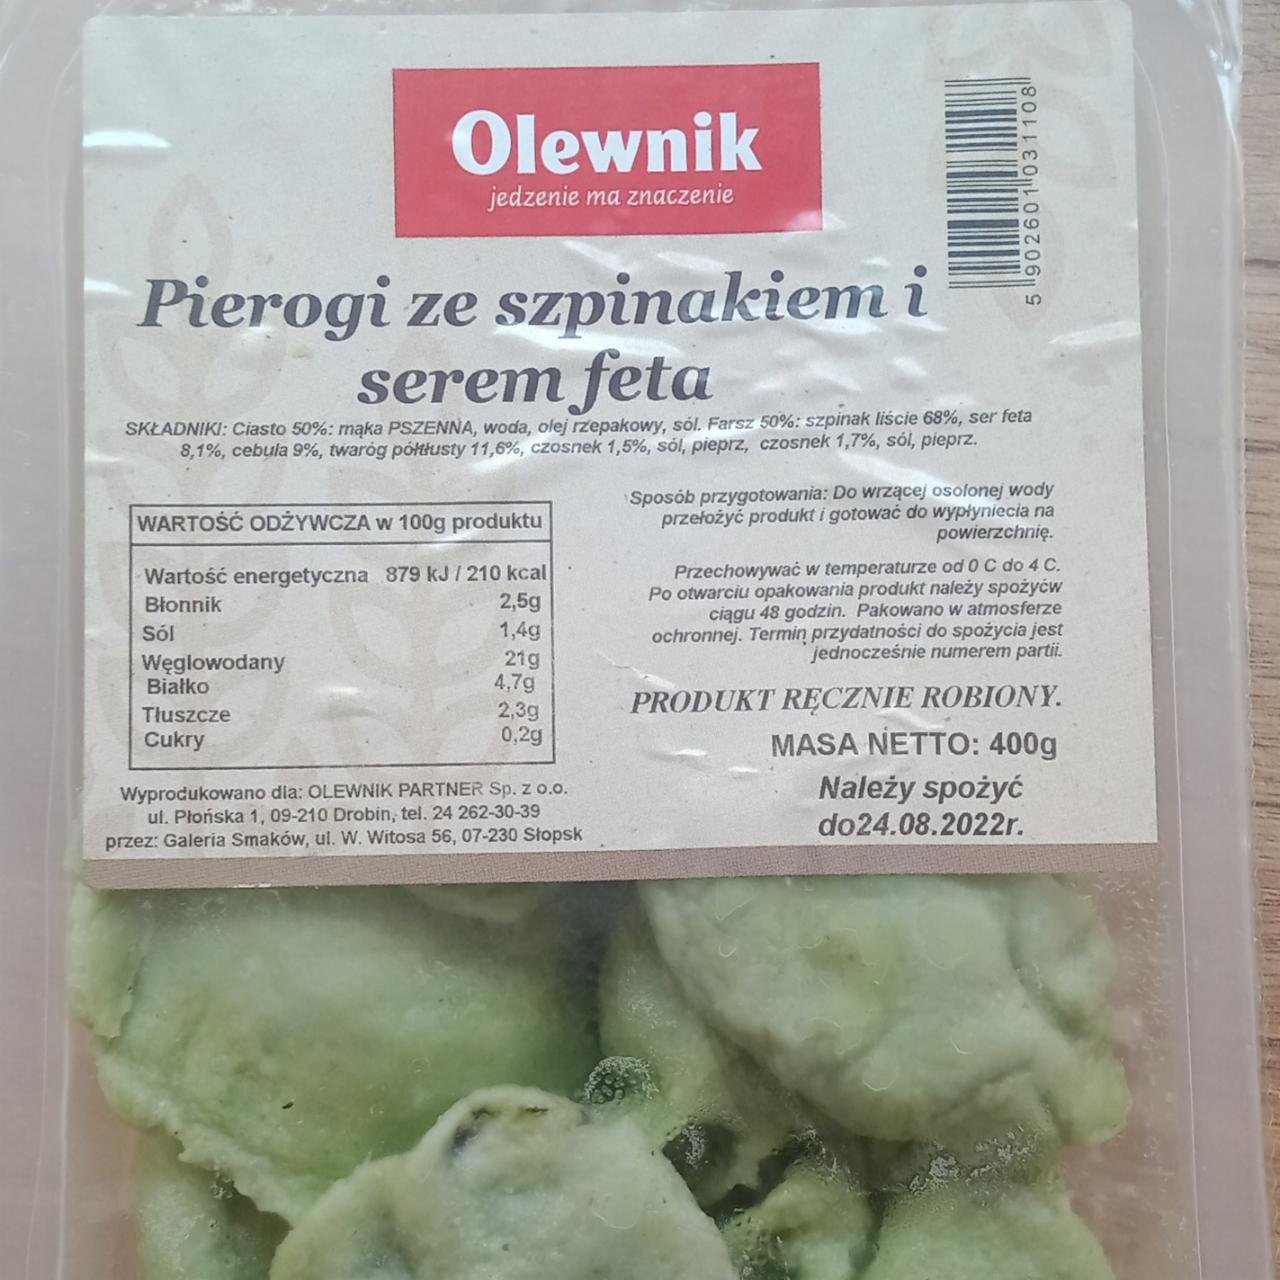 Zdjęcia - Pierogi ze szpinakiem i serem feta Olewnik